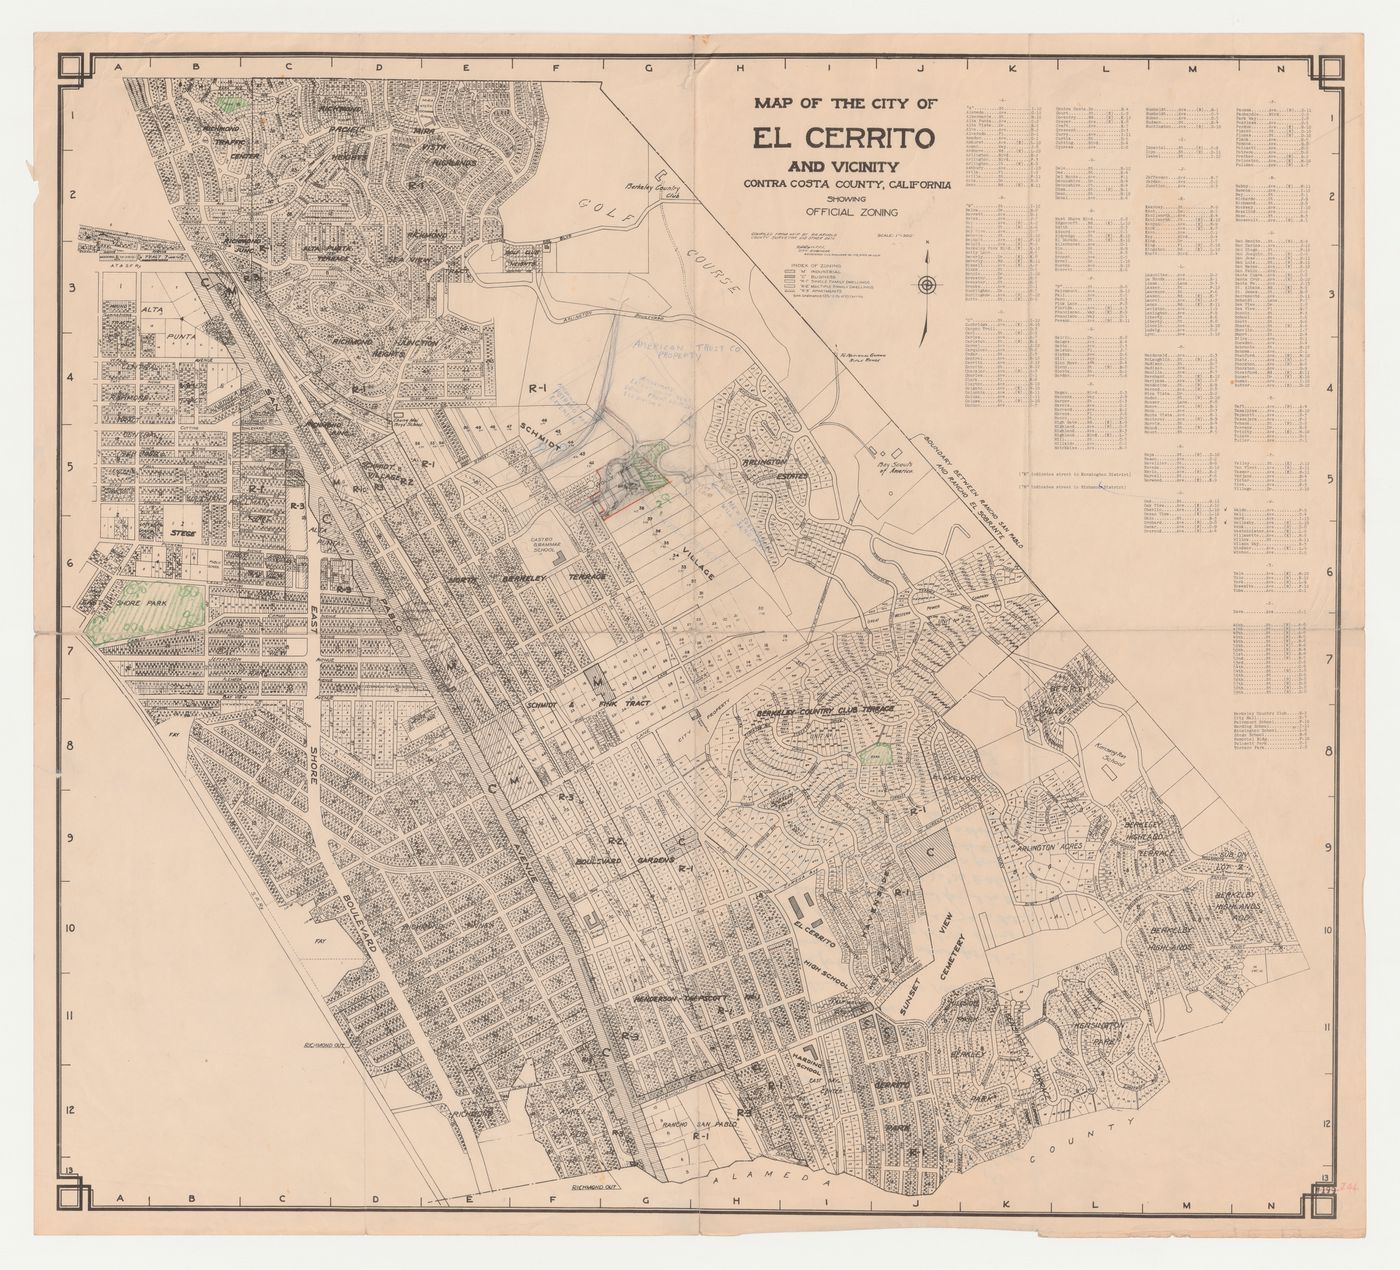 Swedenborg Memorial Chapel, El Cerrito, California: Sketch site plan on a map of the city of El Cerrito and vicinity